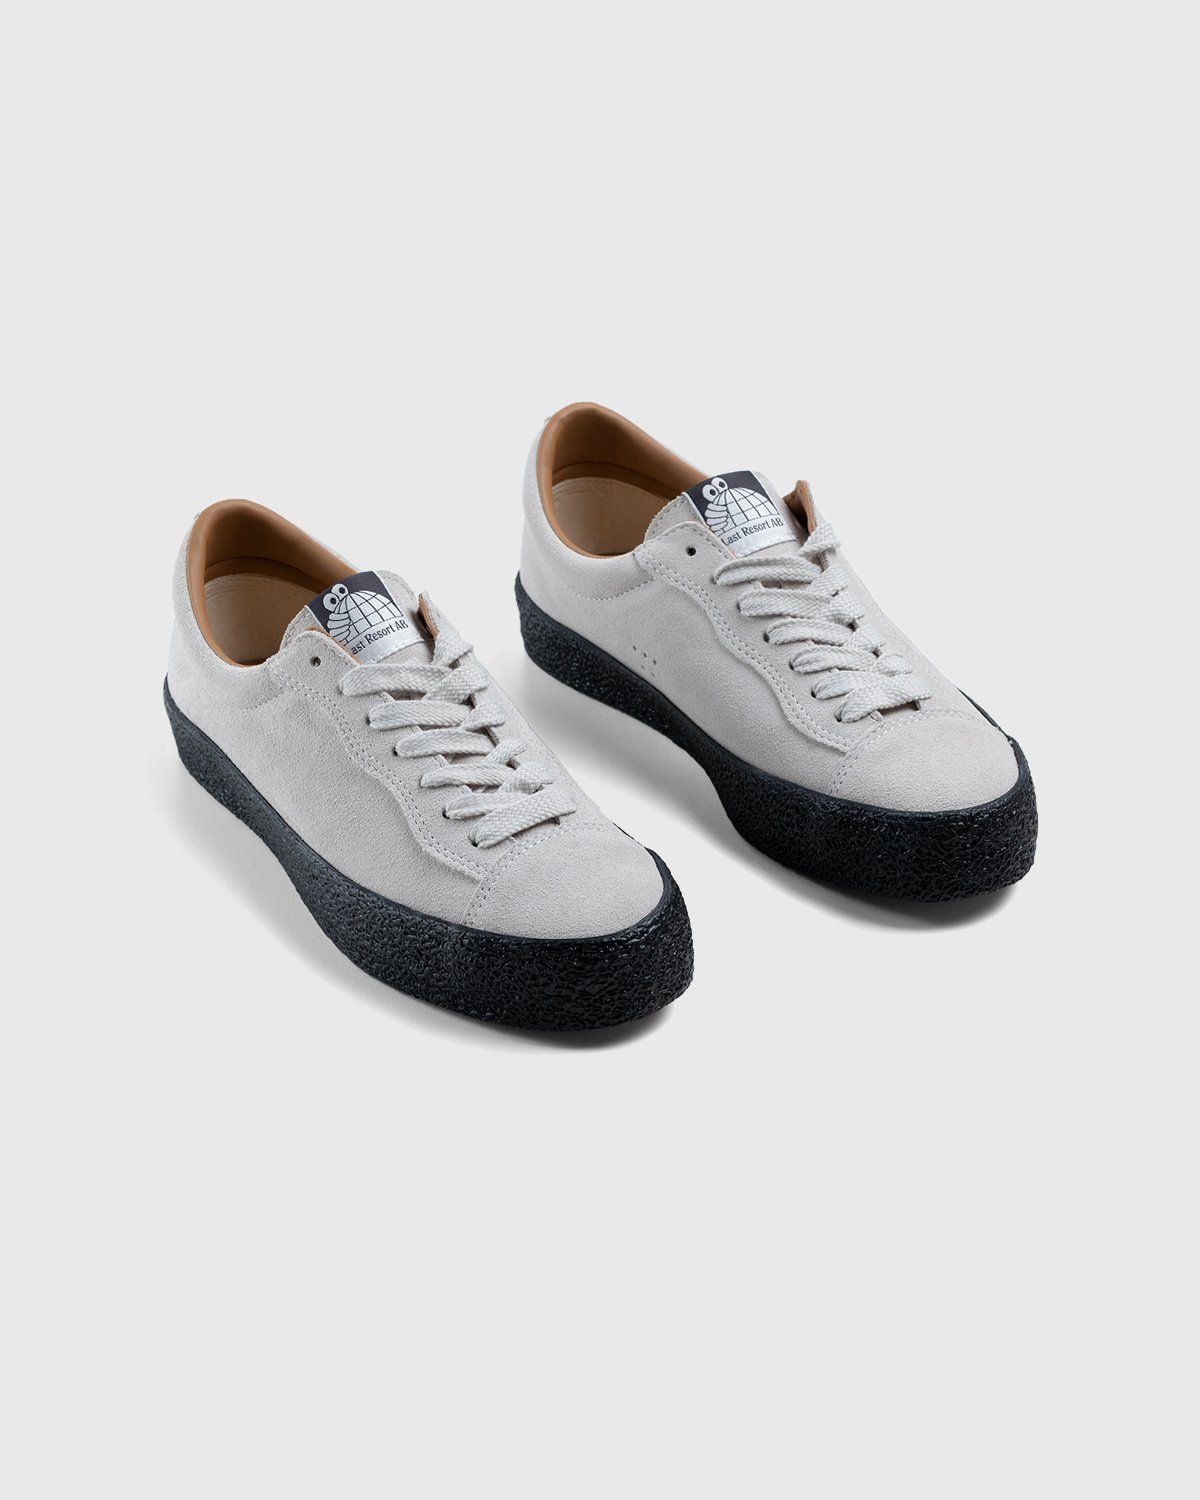 Last Resort AB – VM002 Suede Lo White/Black - Sneakers - White - Image 3